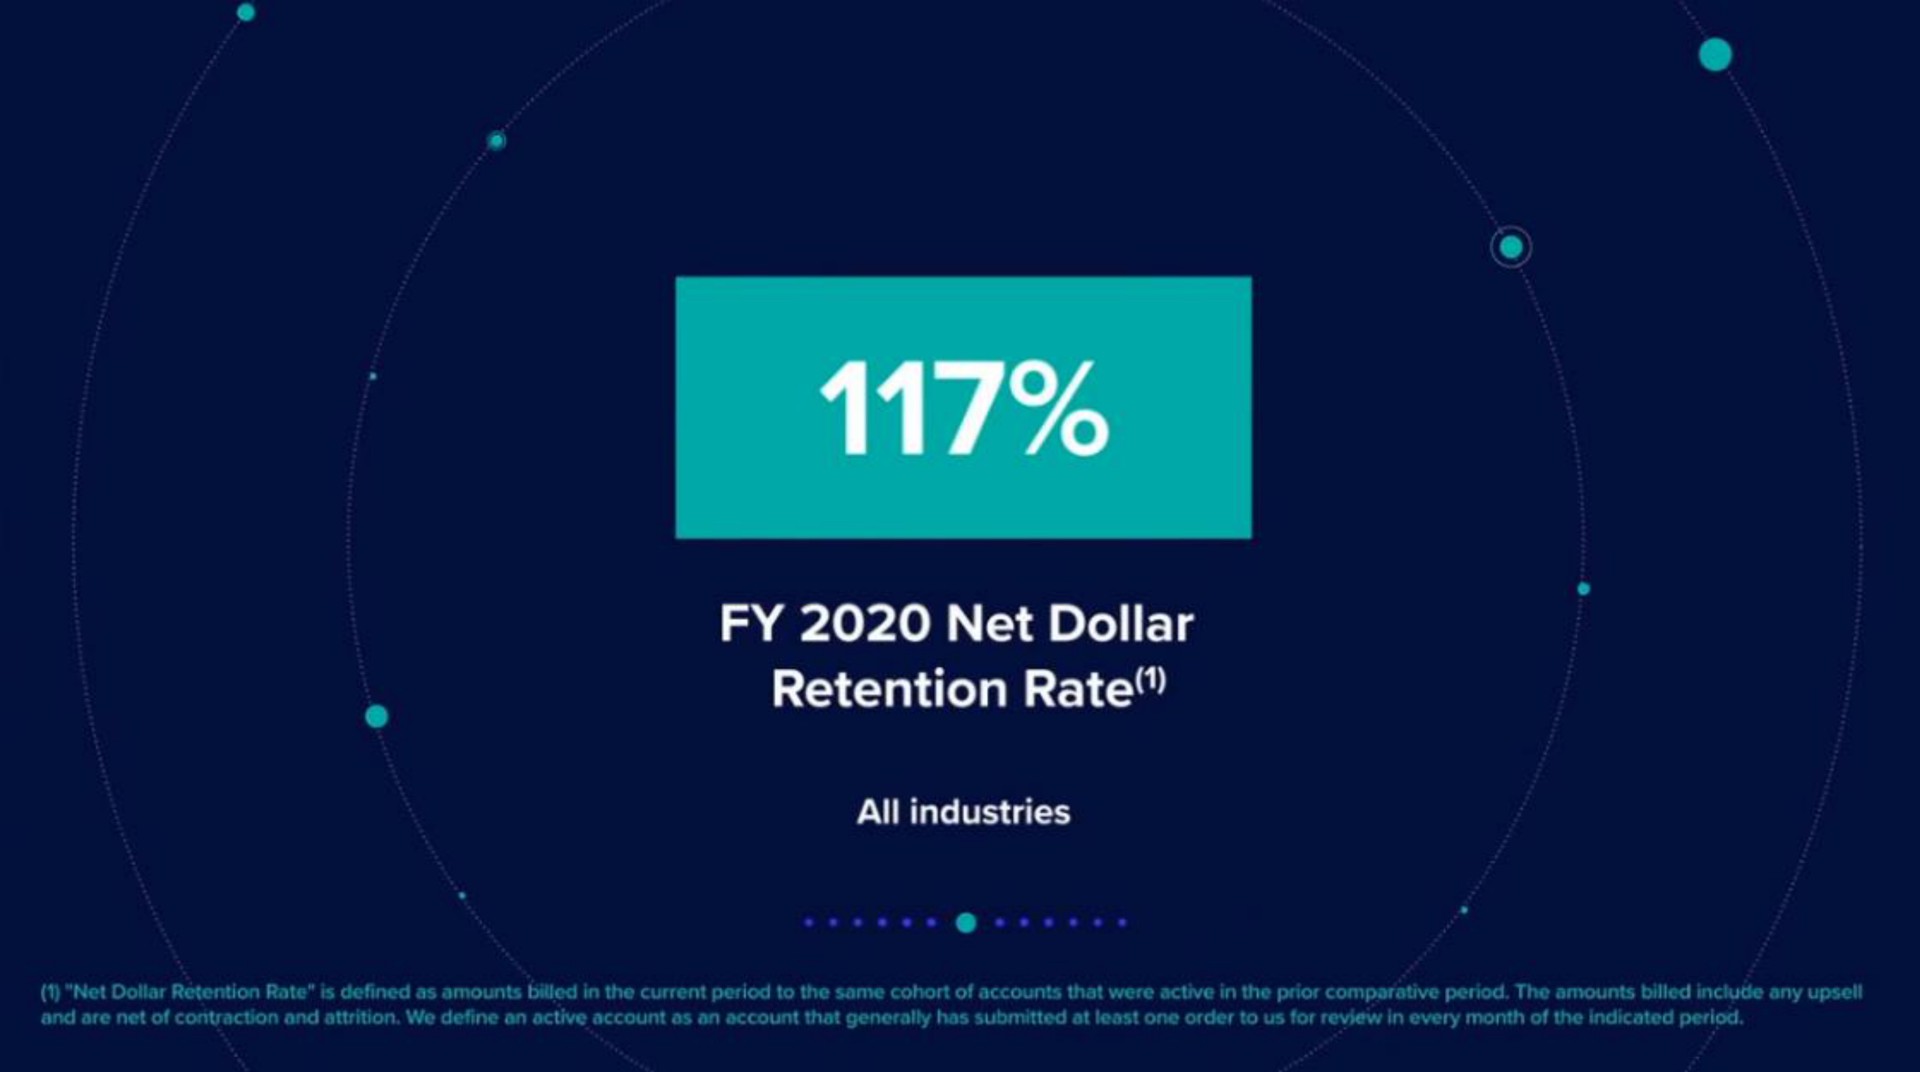 net dollar retention rate | Riskified